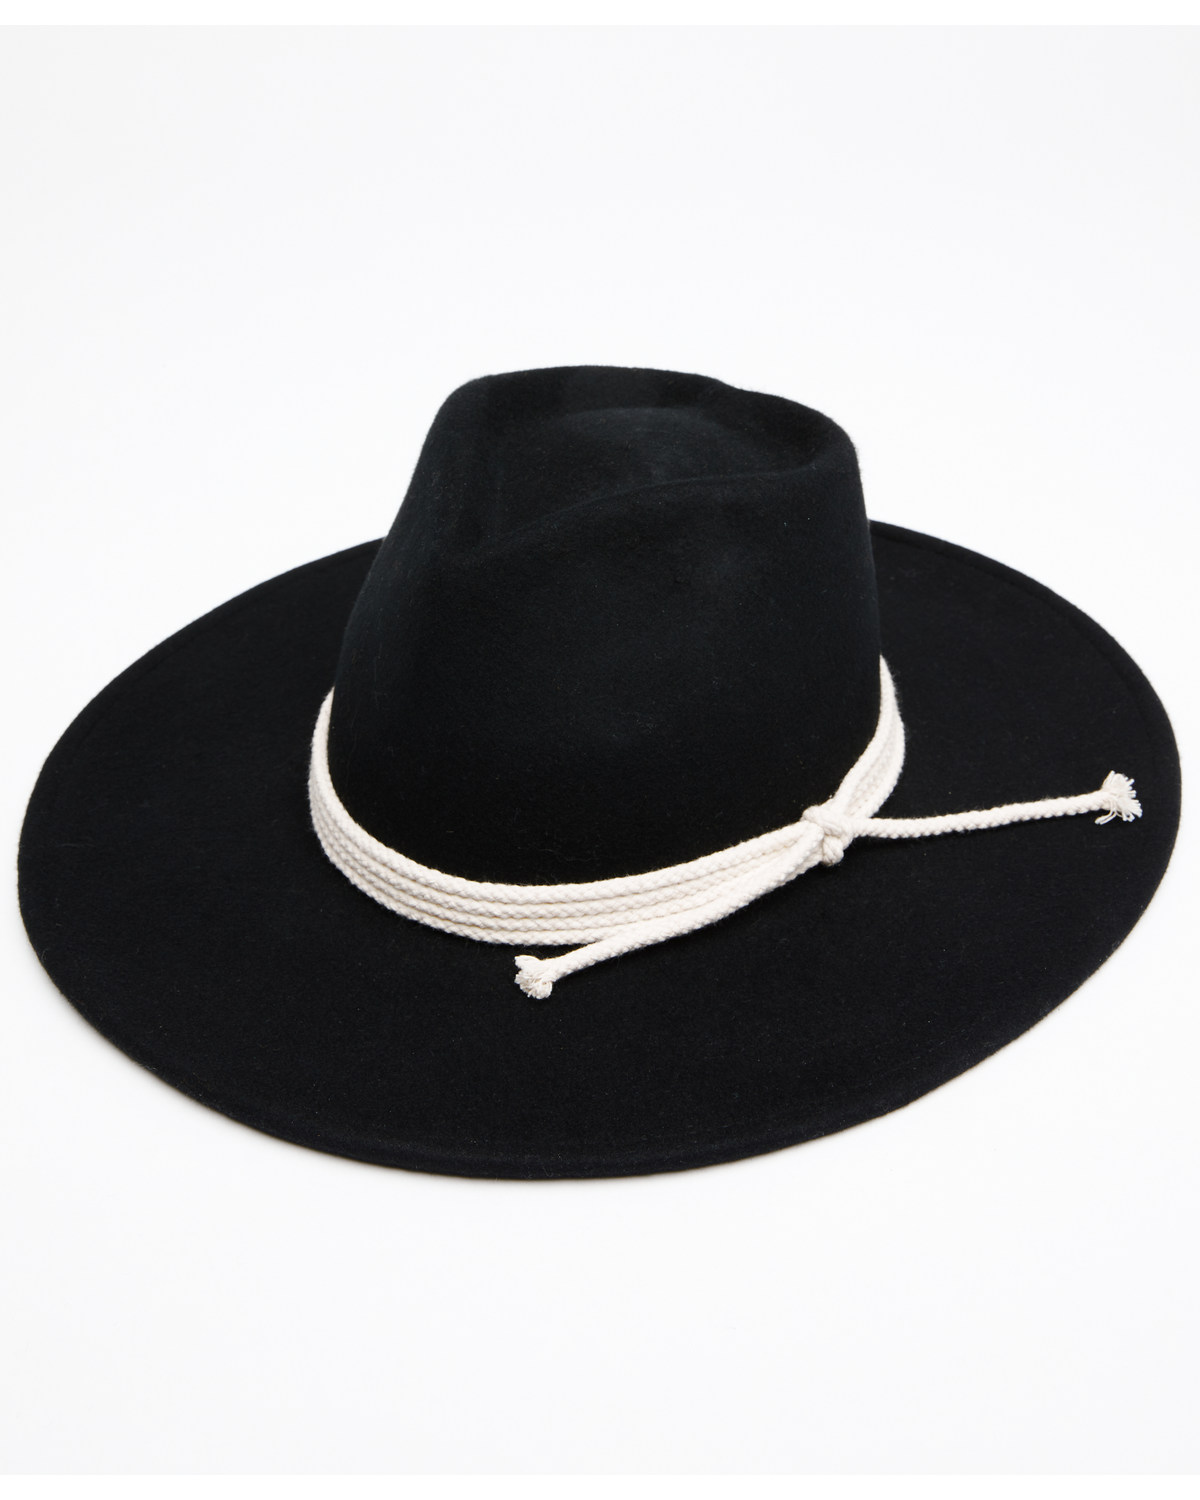 Peter Grimm Women's Mystique Felt Western Fashion Hat